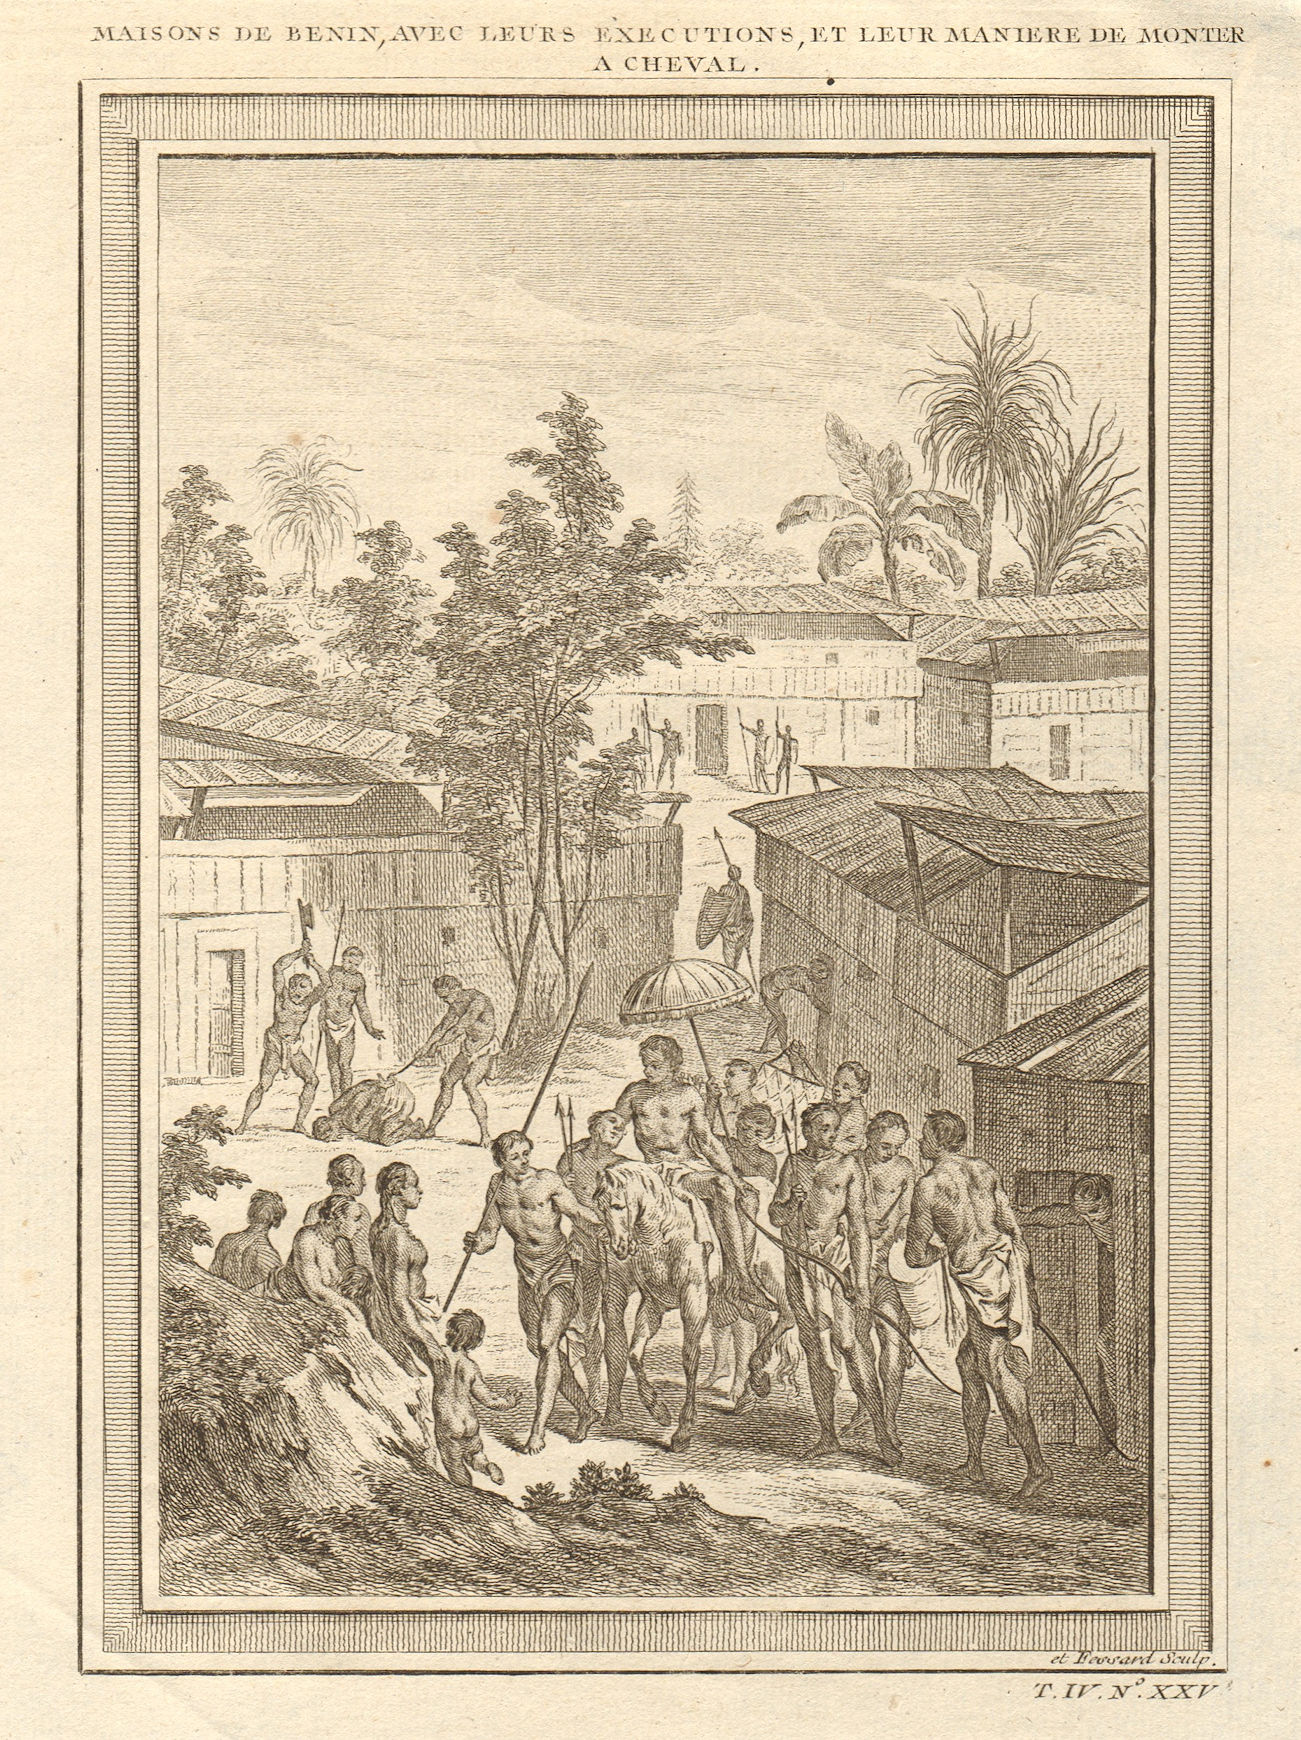 Associate Product Houses of Benin. Beheading executions. Horseback riding sidesaddle 1747 print